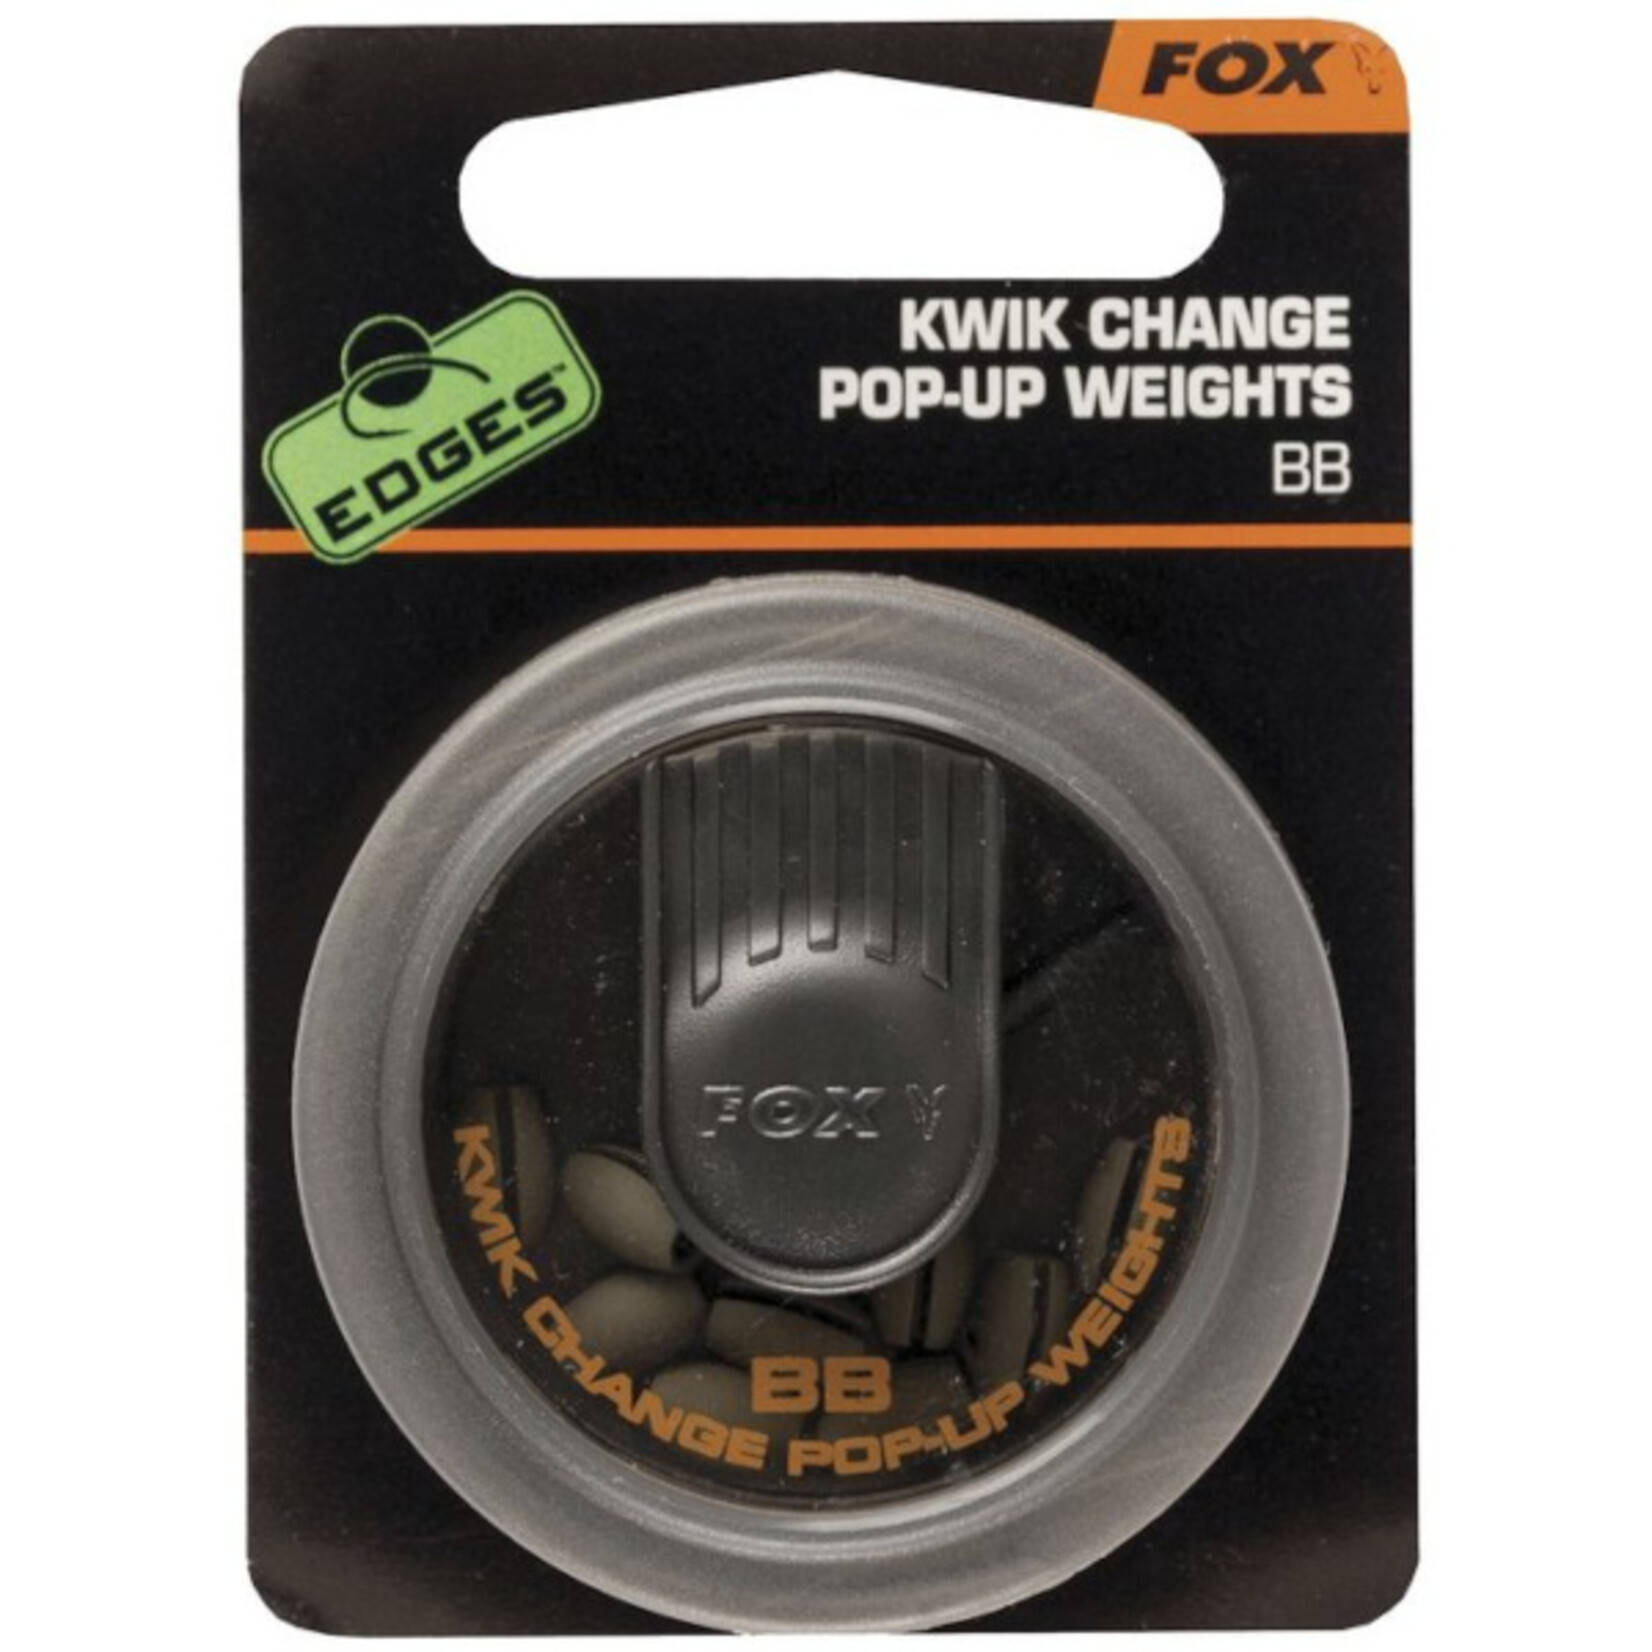 FOX Kwik Change Pop -up Weights no4